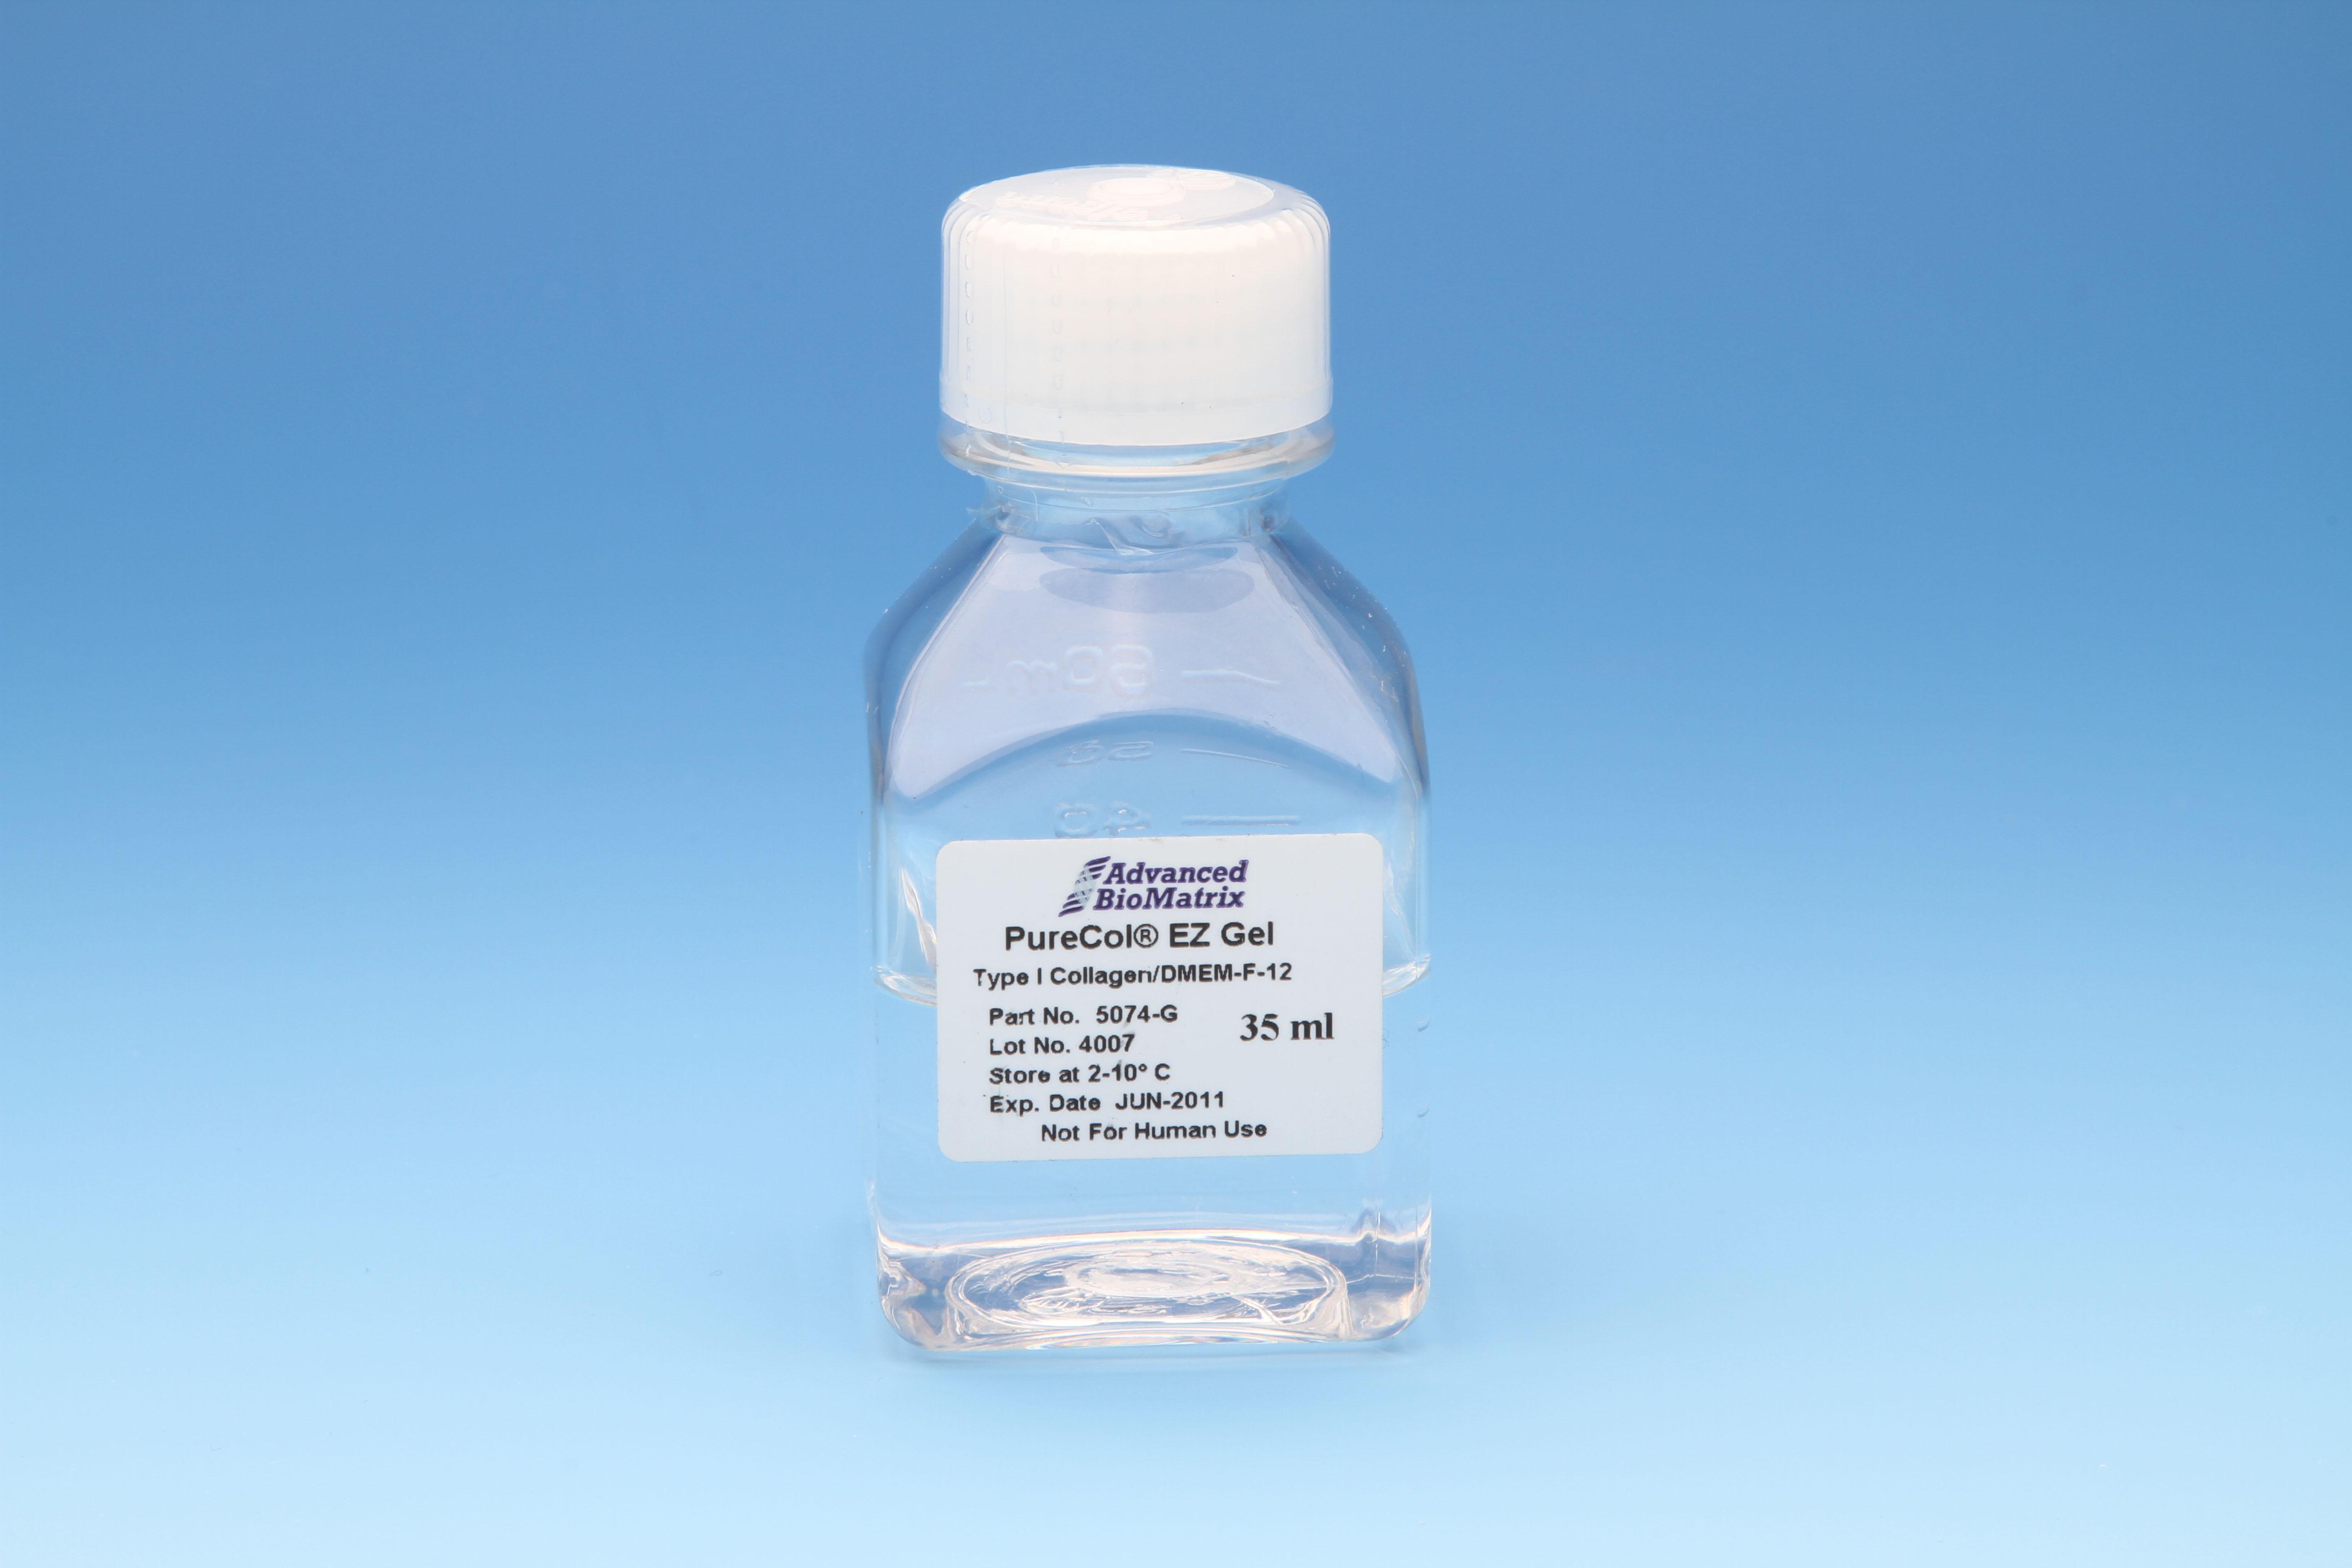 PureCol EZ Gel Type I Collagen from Advanced BioMatrix